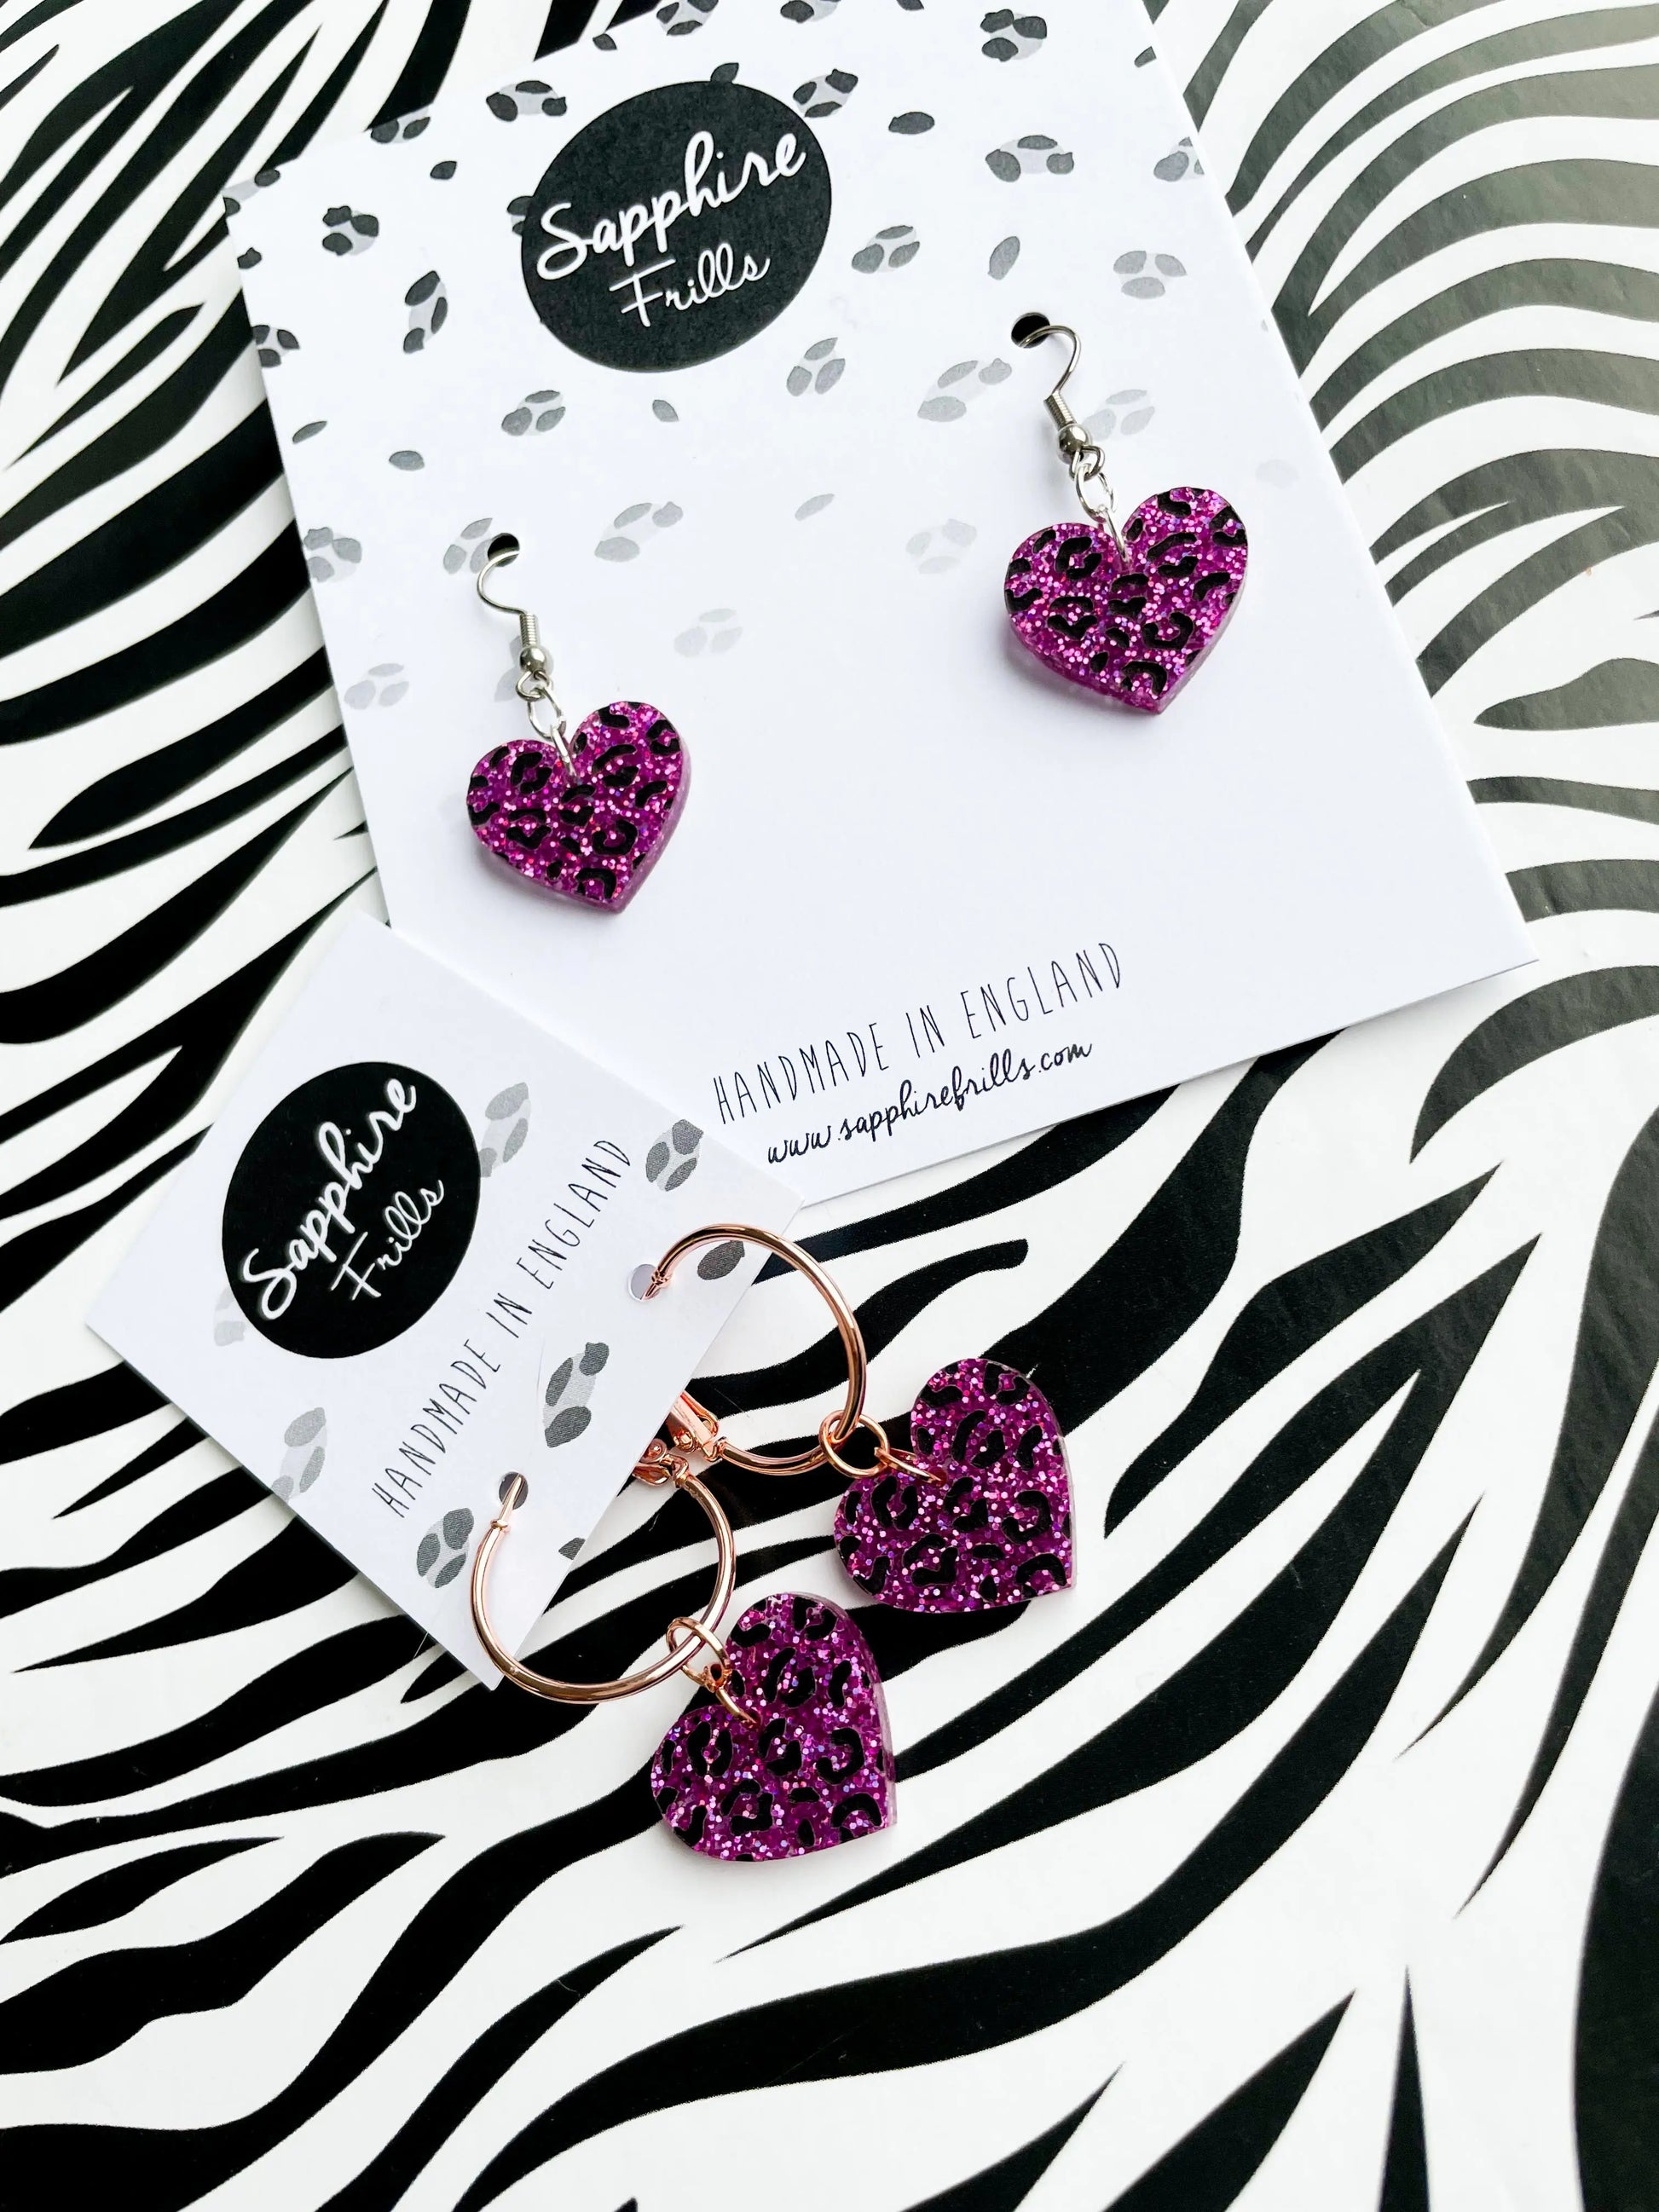 Medium Holographic Purpley Pink Glitter Leopard Print Acrylic Heart Dangle Earrings from Sapphire Frills